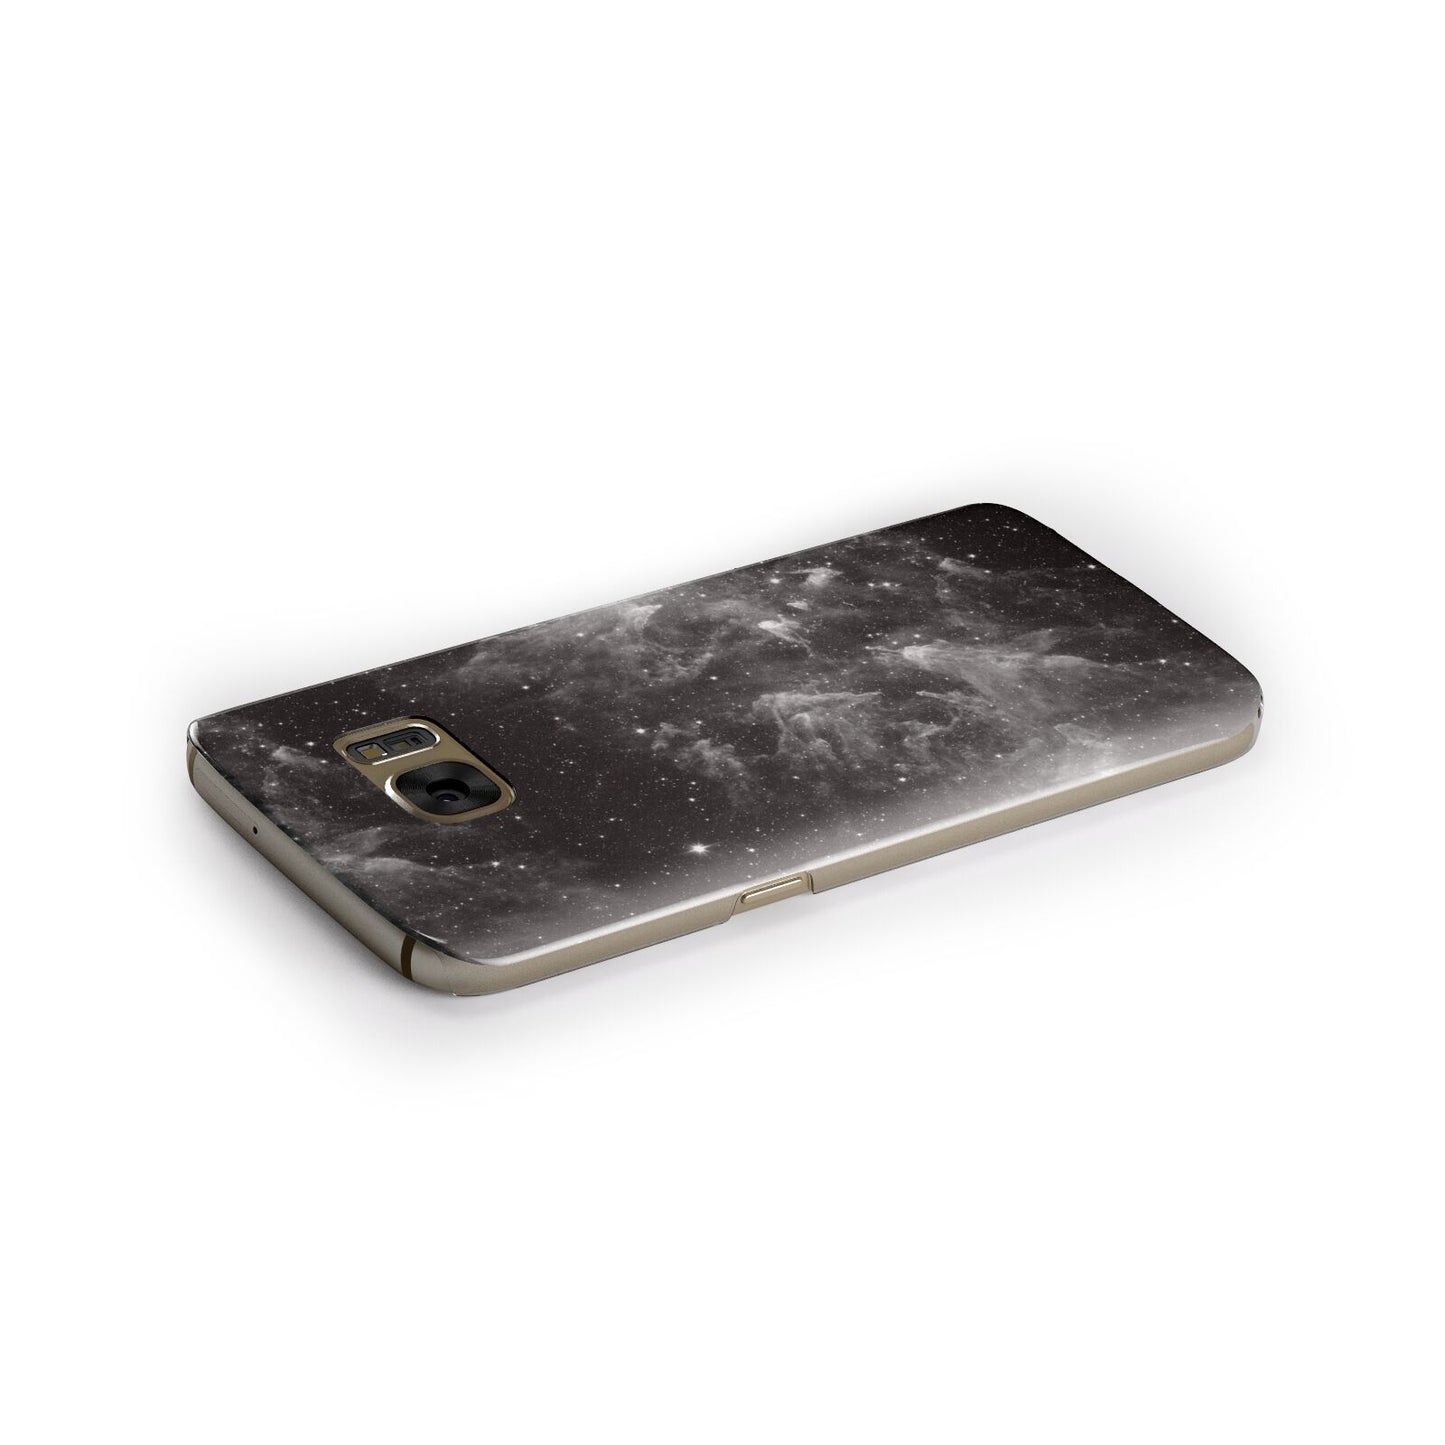 Black Space Samsung Galaxy Case Side Close Up